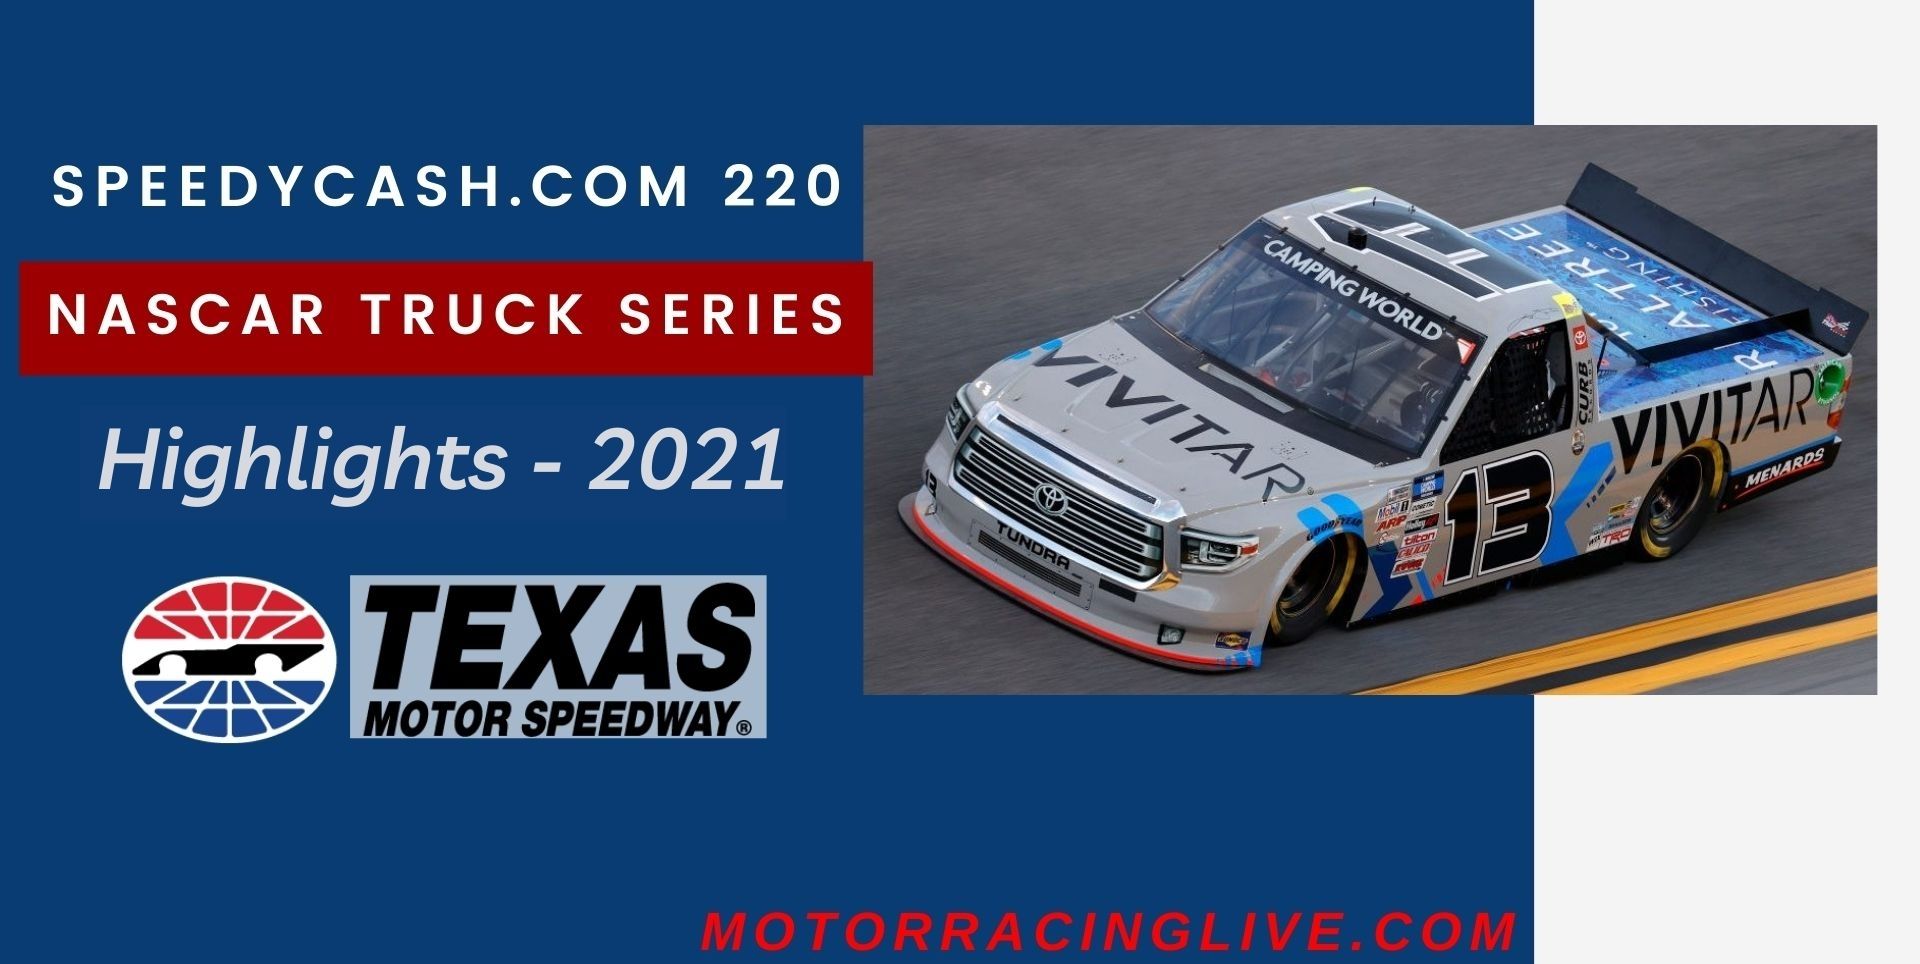 SPEEDYCASH COM 220 Highlights 2021 NASCAR Truck